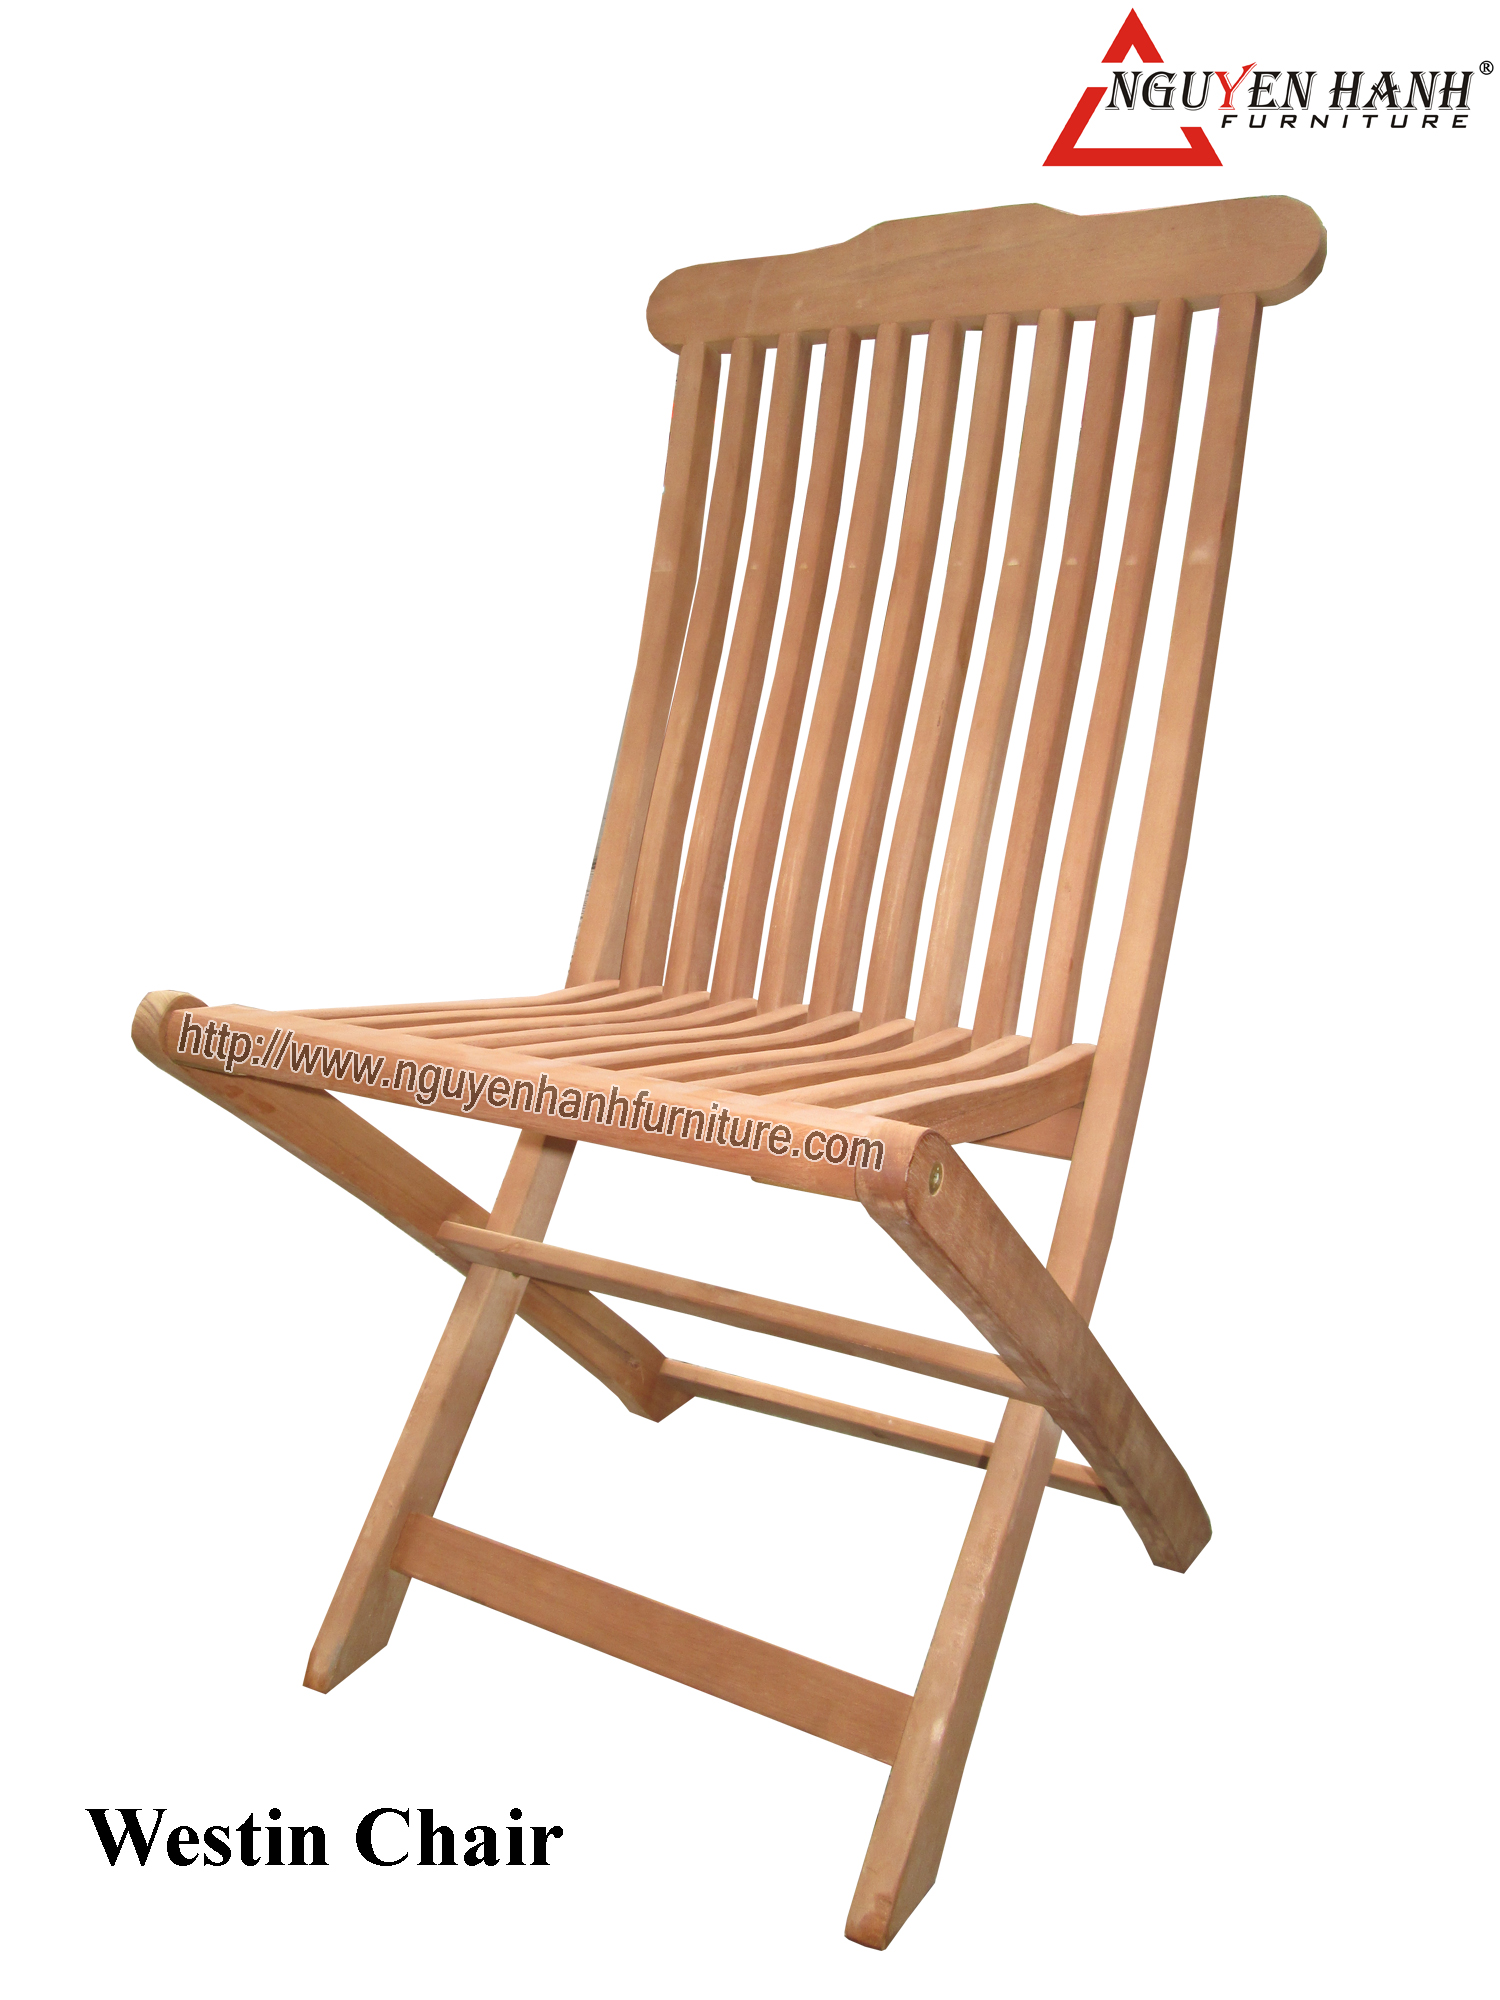 Name product: Westin Chair - Description: Eucalyptus wood